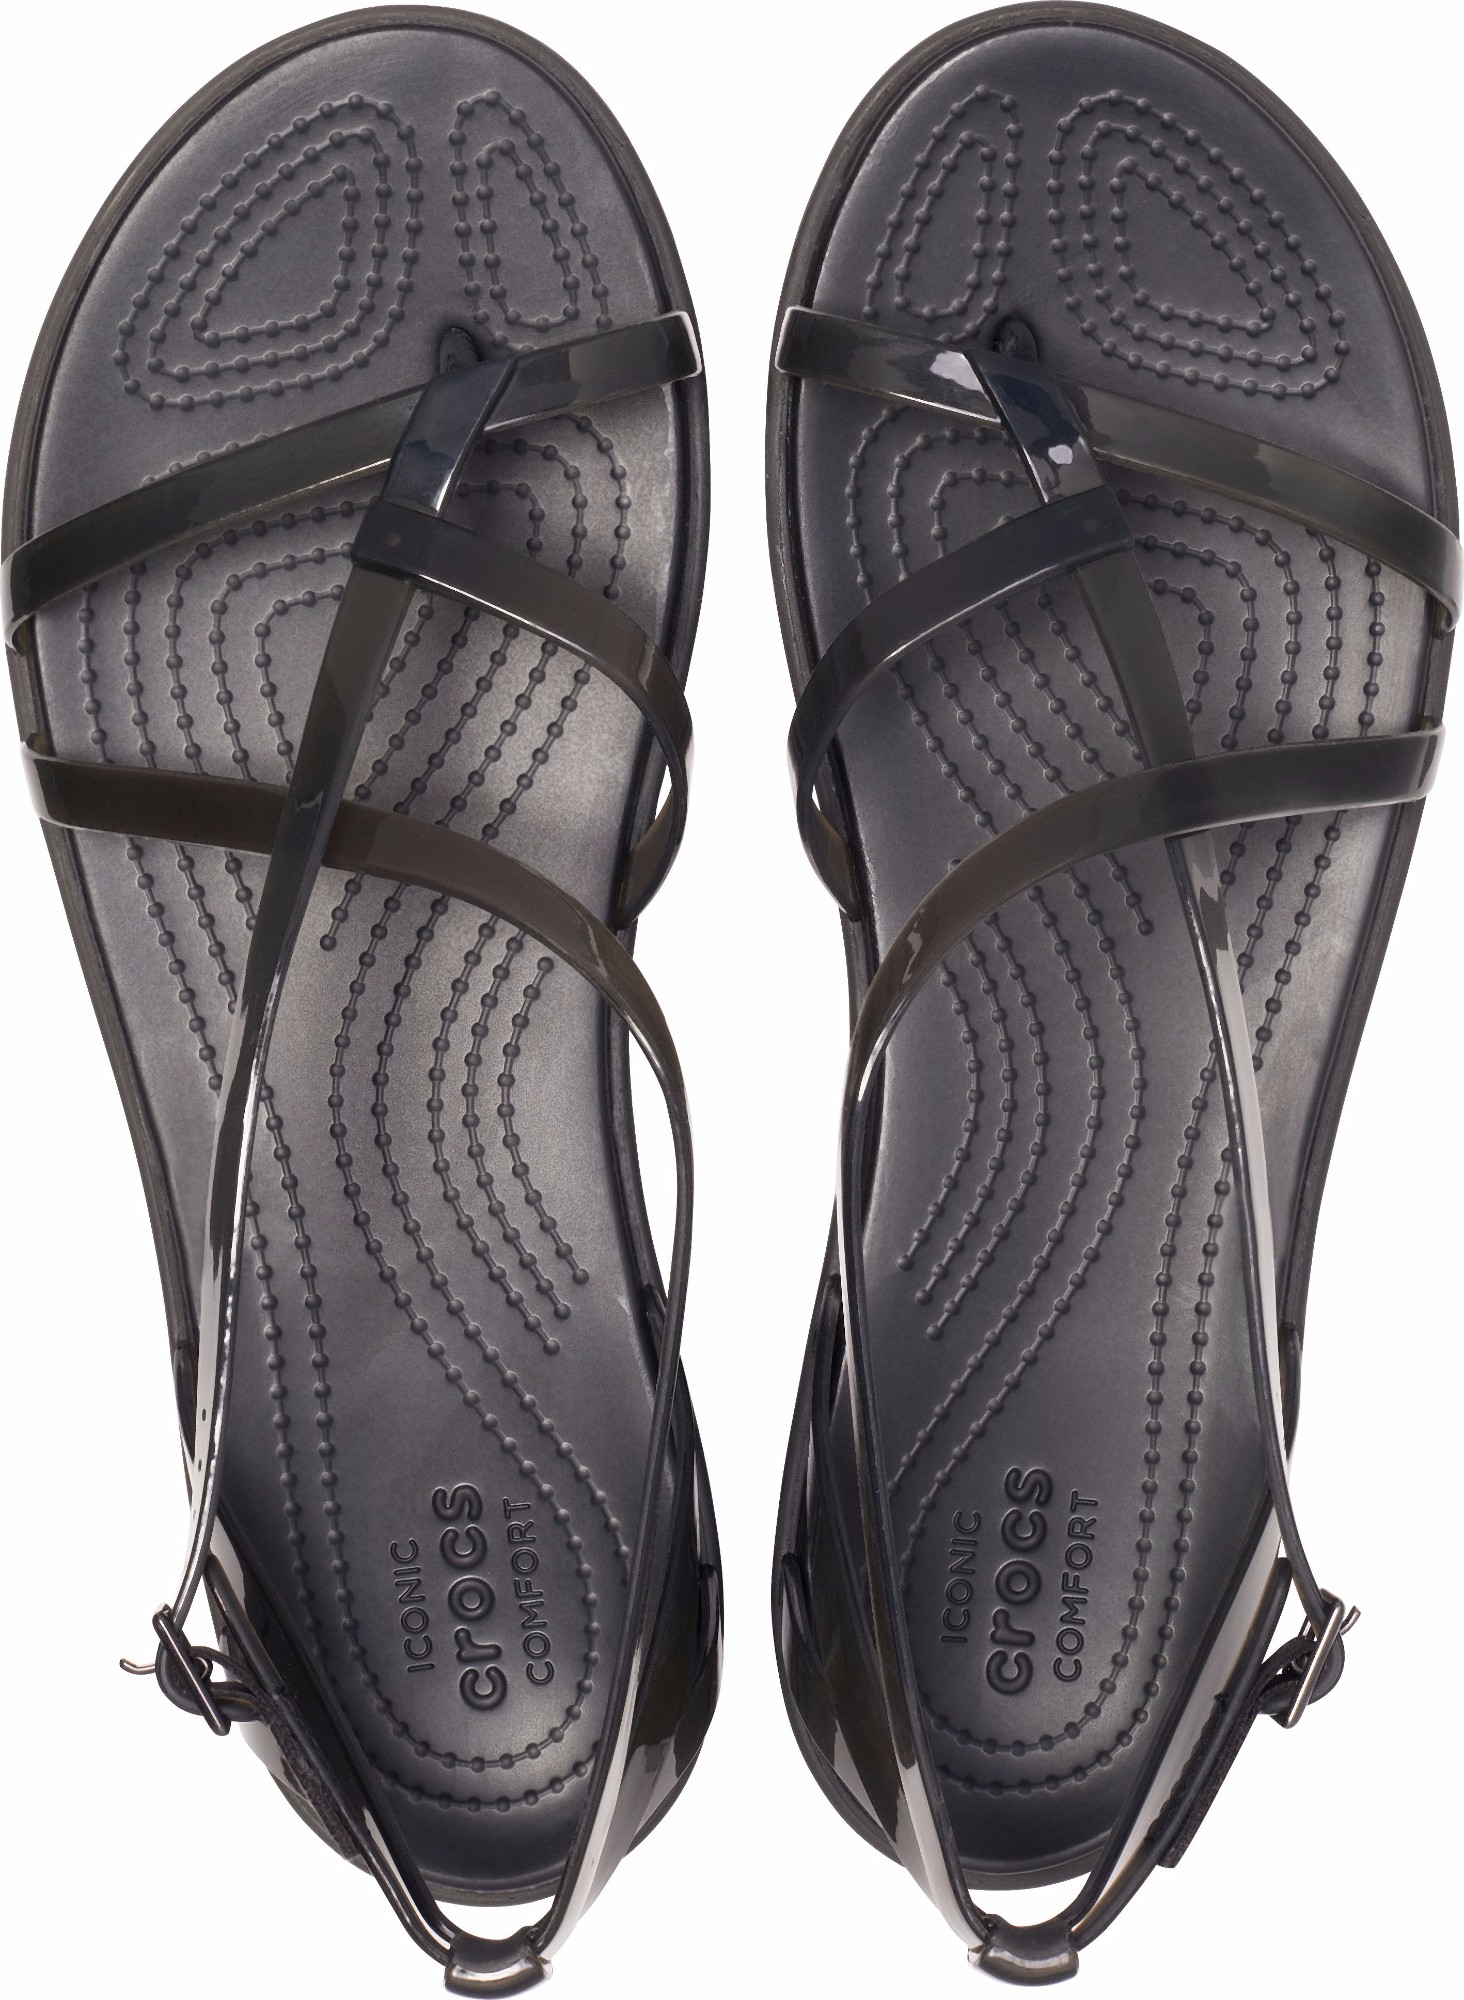 crocs gladiator sandals